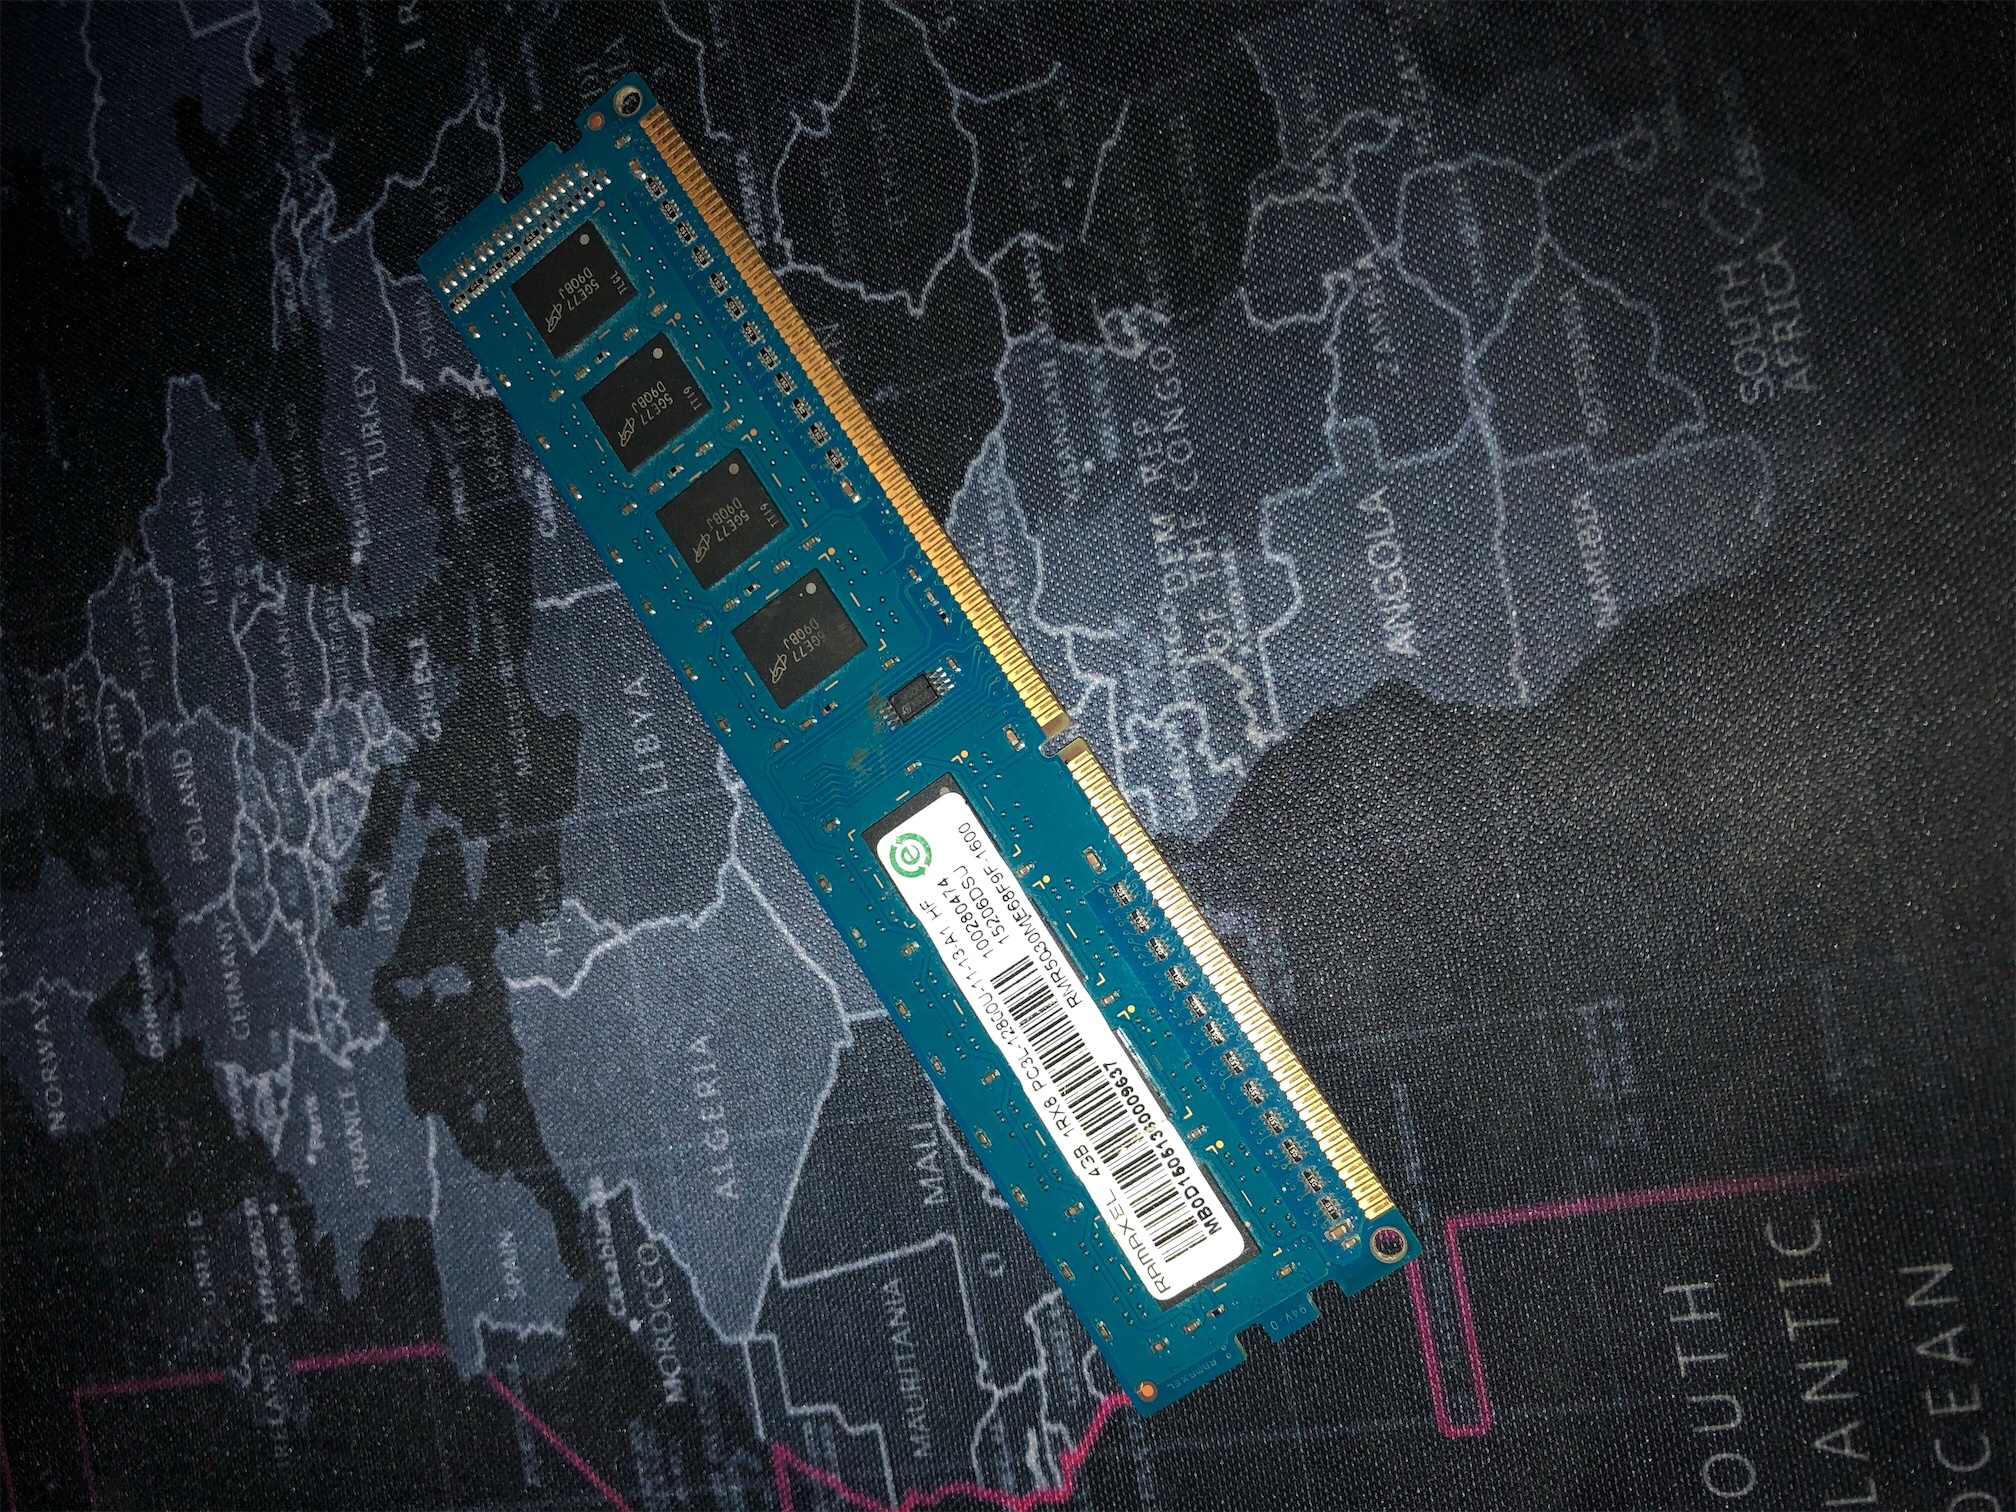 accesorios para electronica - 4GB DE RAM DDR3 BUEN ESTADO